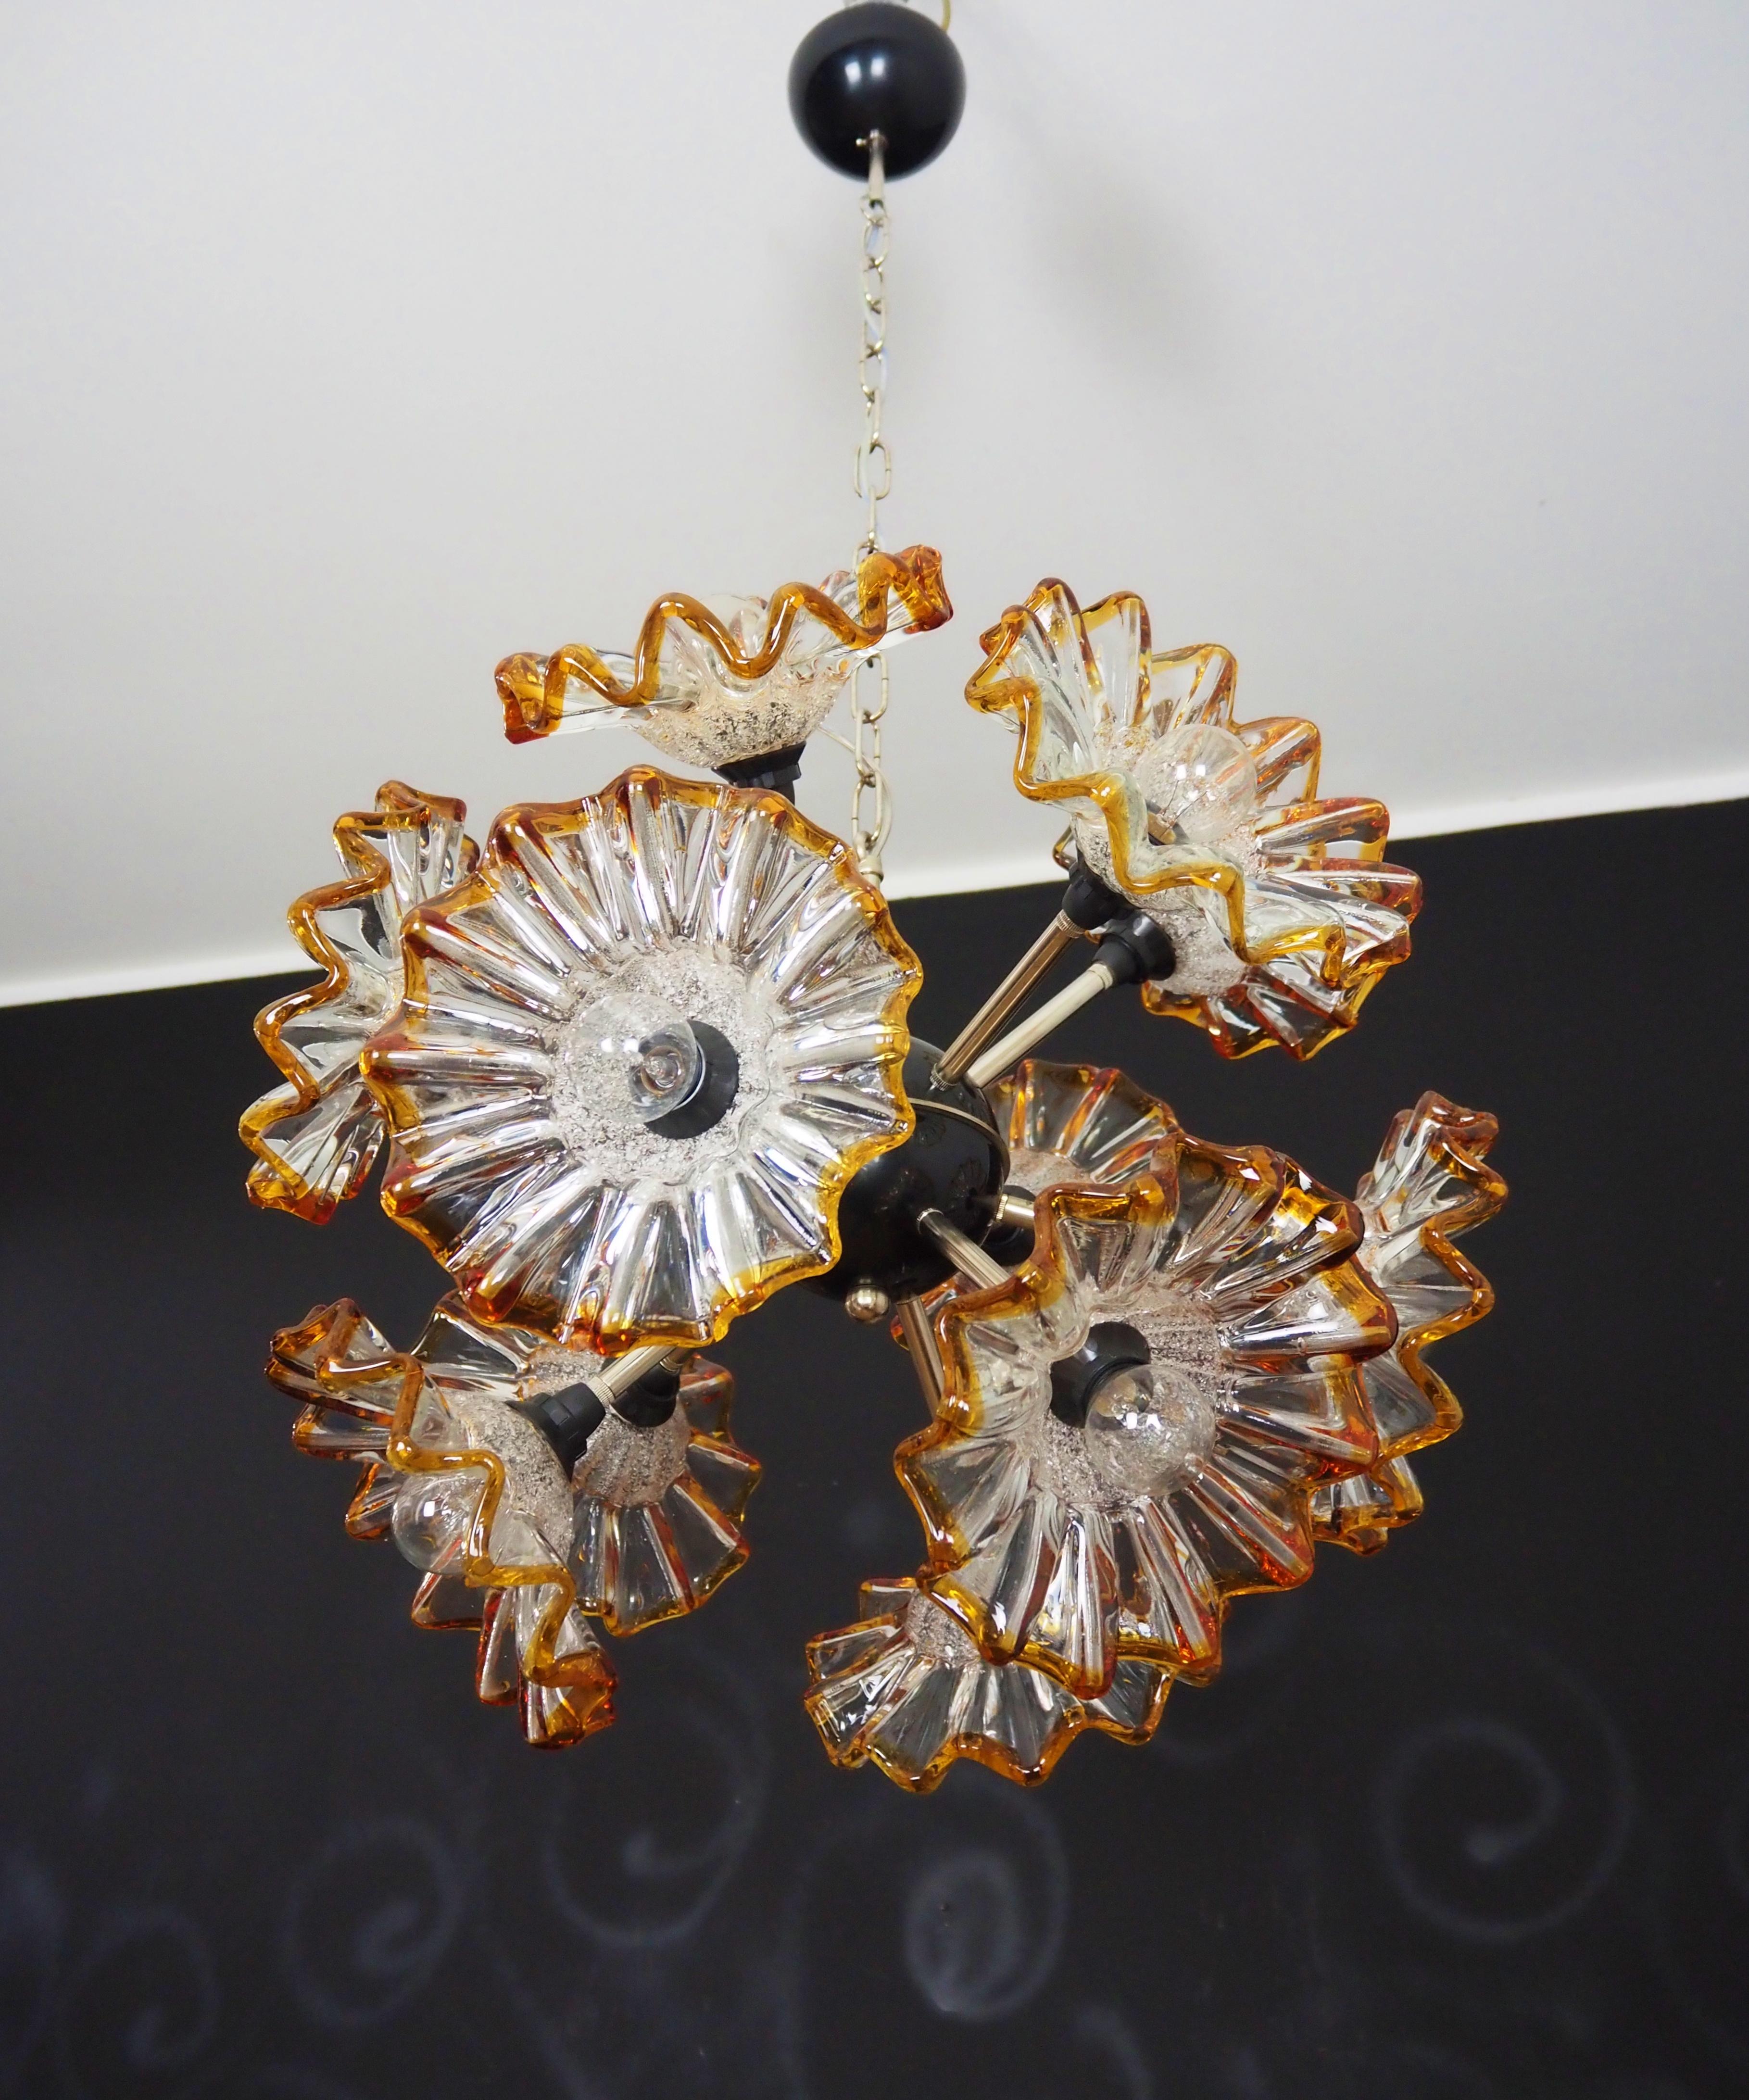 Vintage Sputnik Italian crystal chandelier - 12 flowers 1